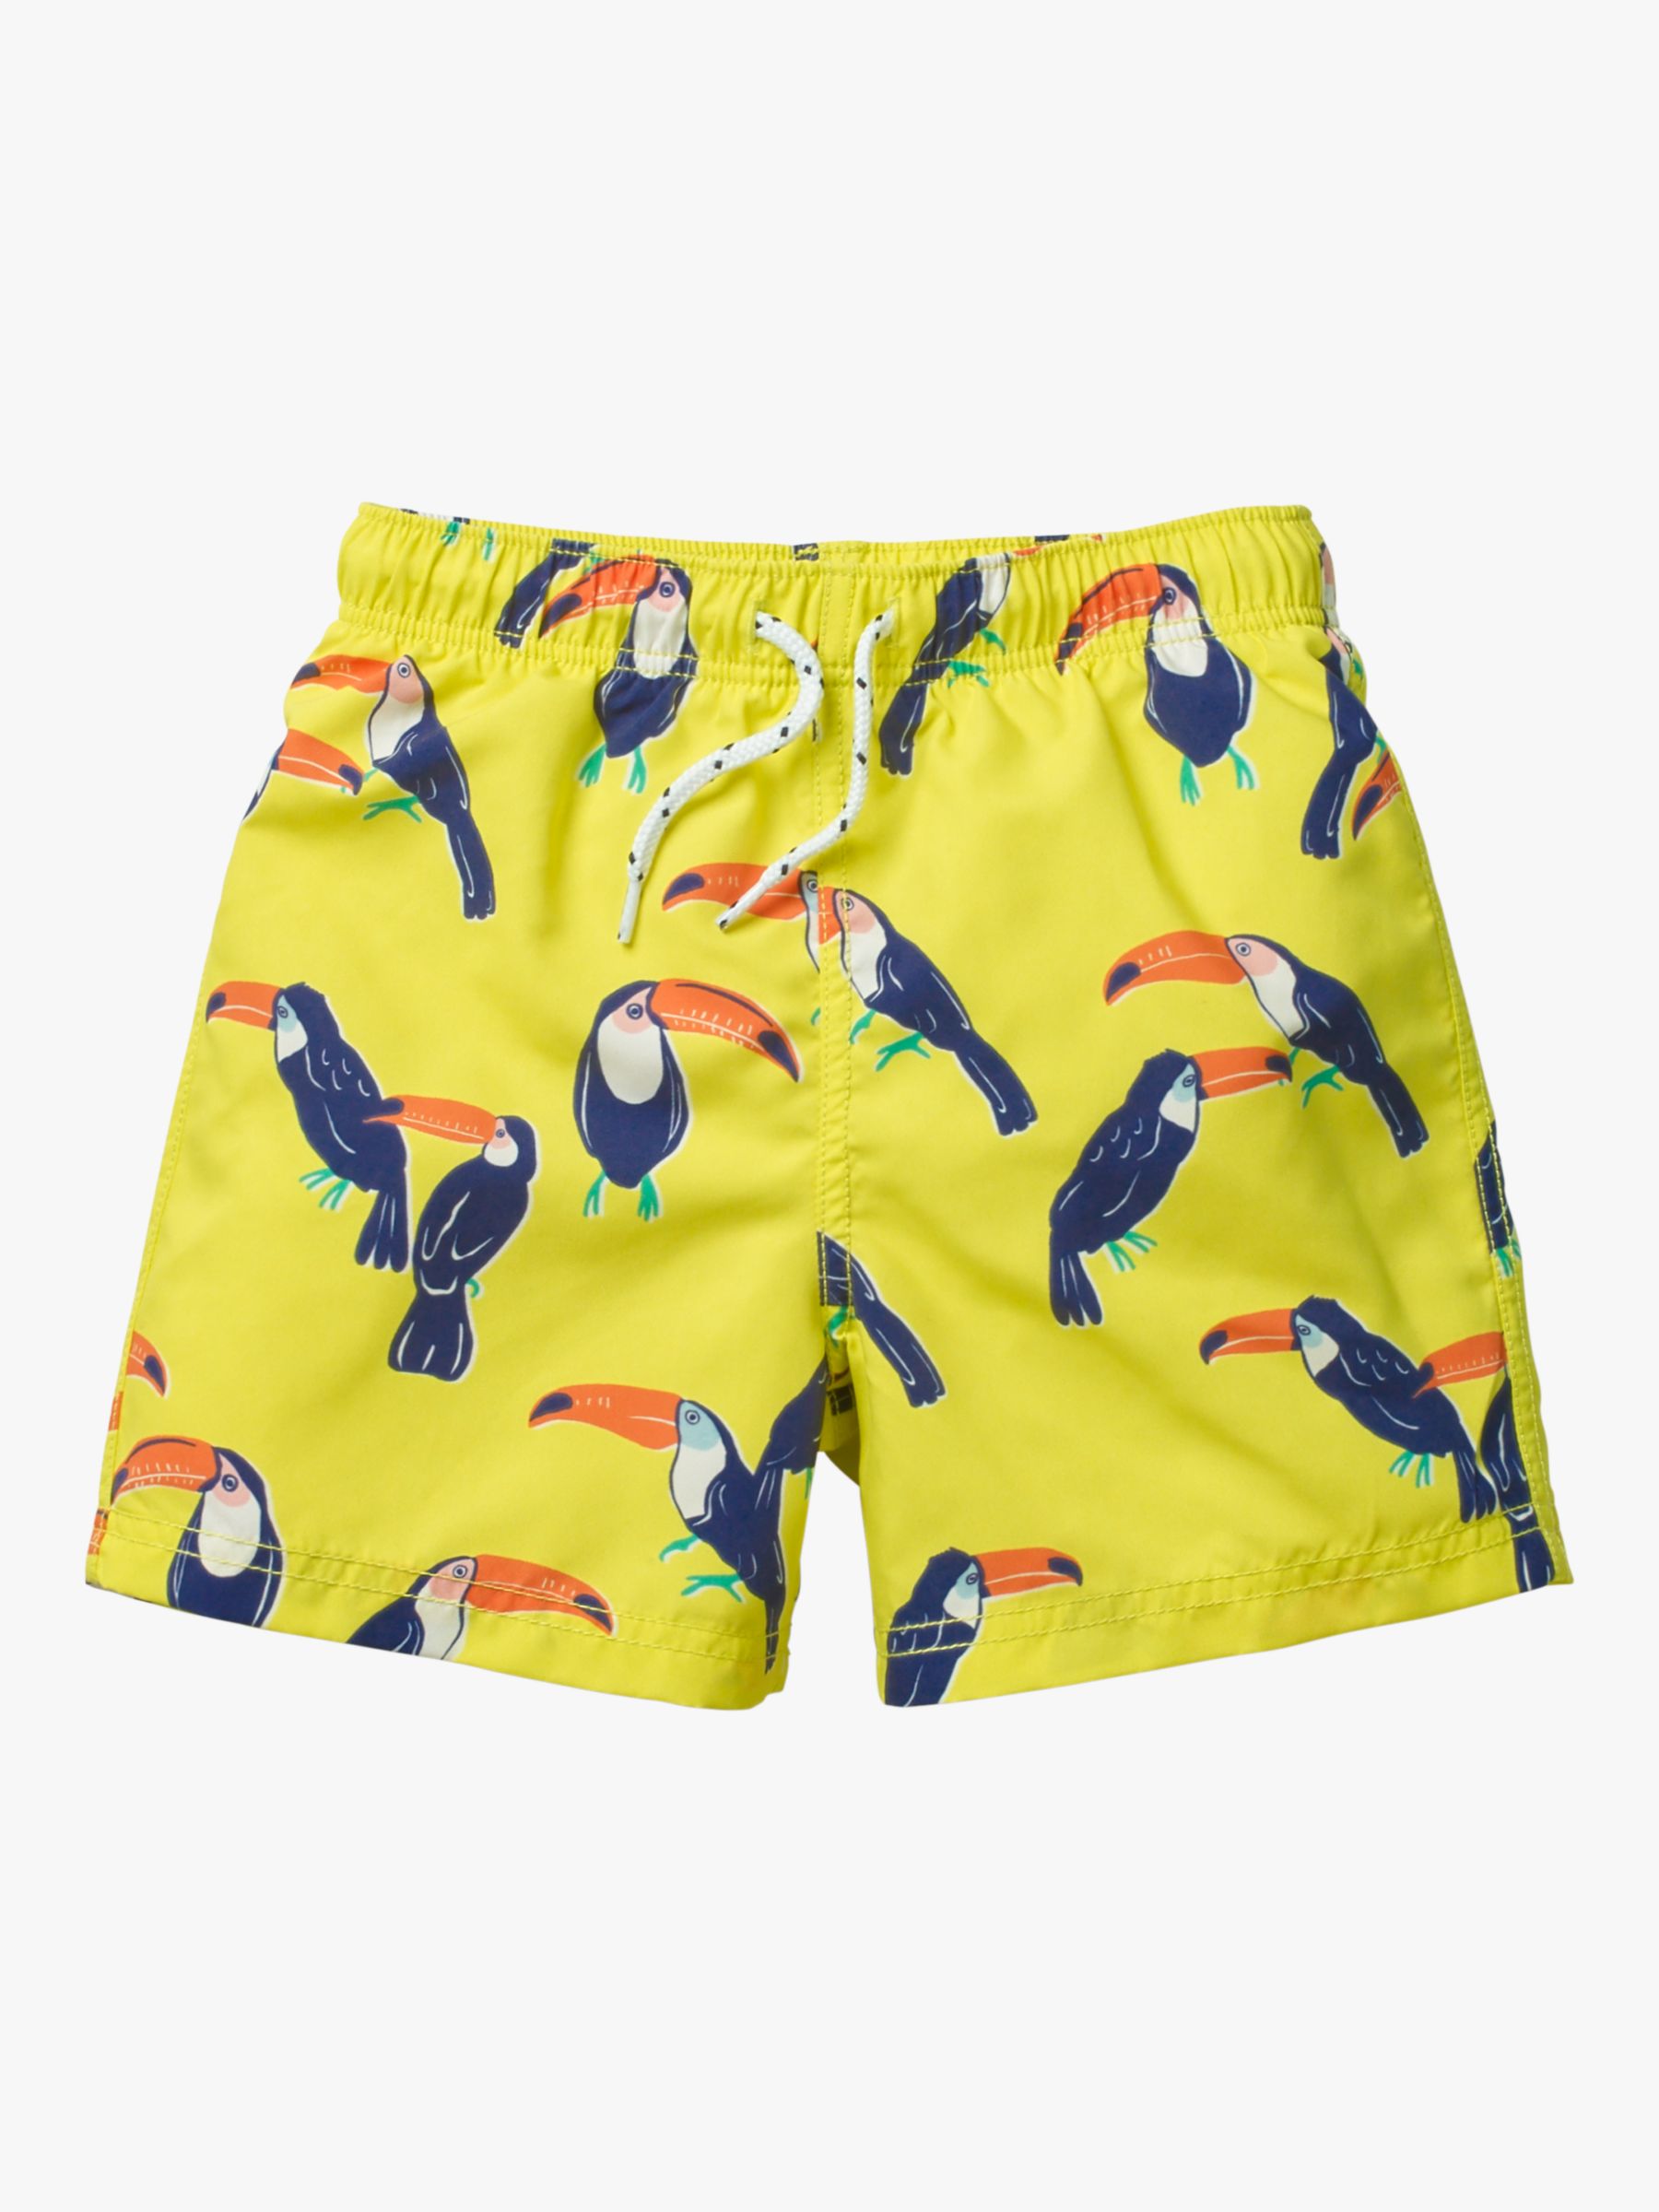 Mini Boden Boys' Bathers Swimming Shorts, Yellow Toucans